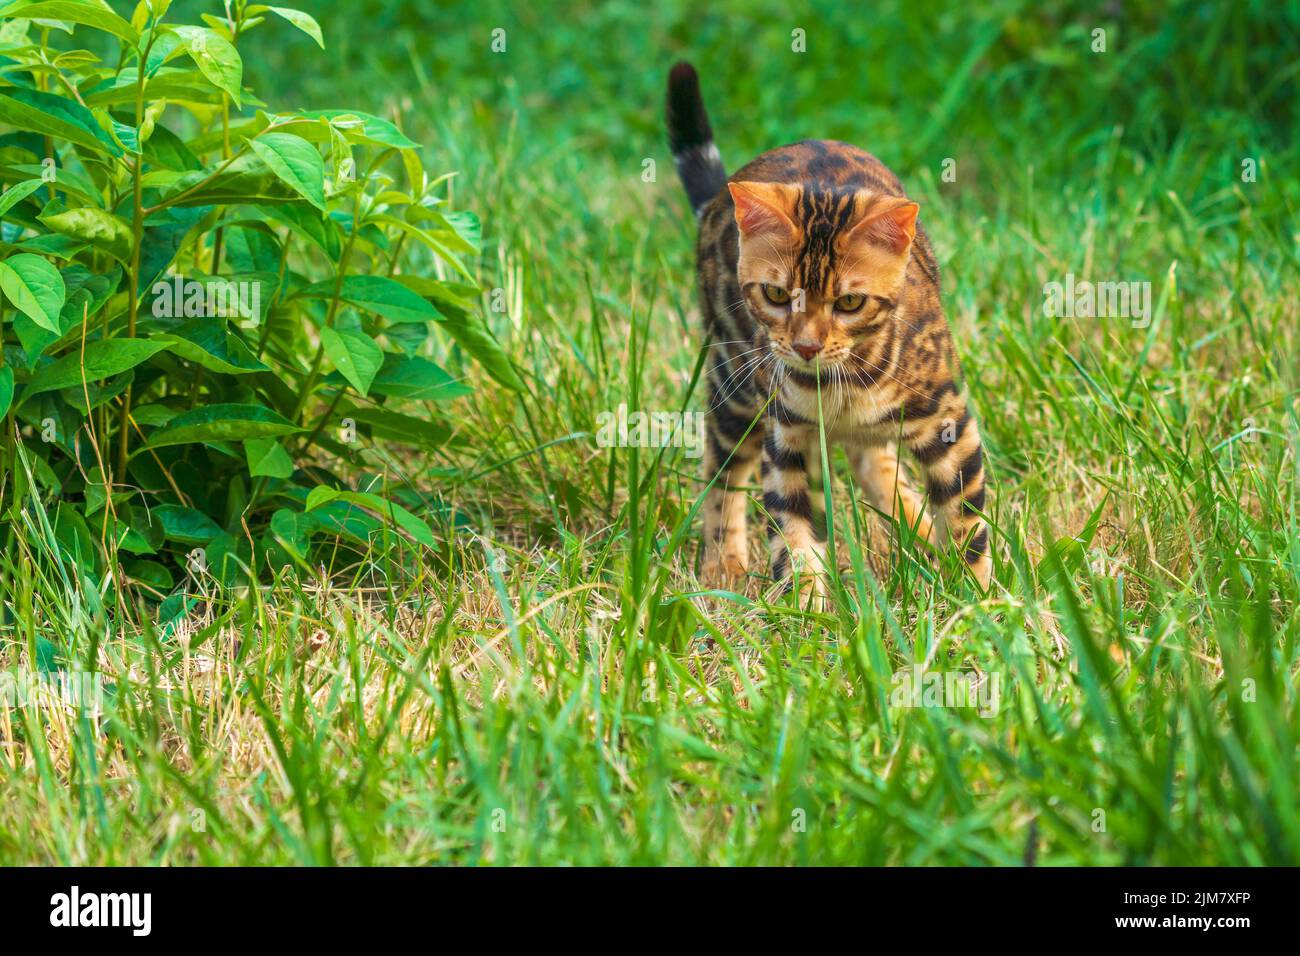 Bel giovane gatto bengala in giardino Foto Stock